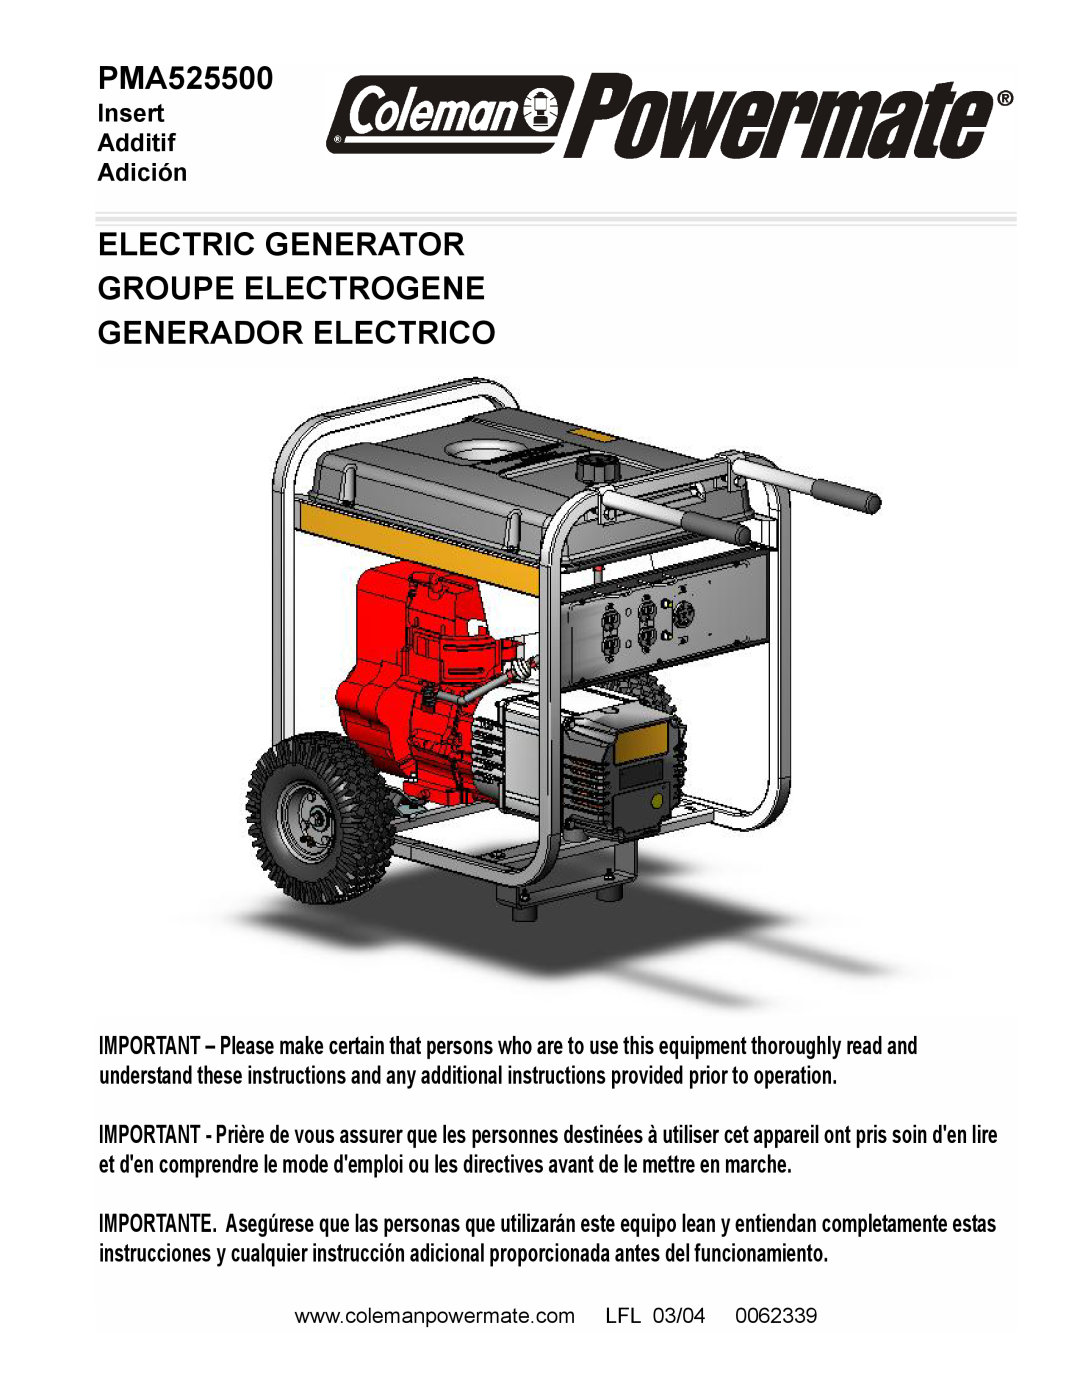 Powermate PMA525500 manual Electric Generator Groupe Electrogene, Generador Electrico, Insert Additif Adición 